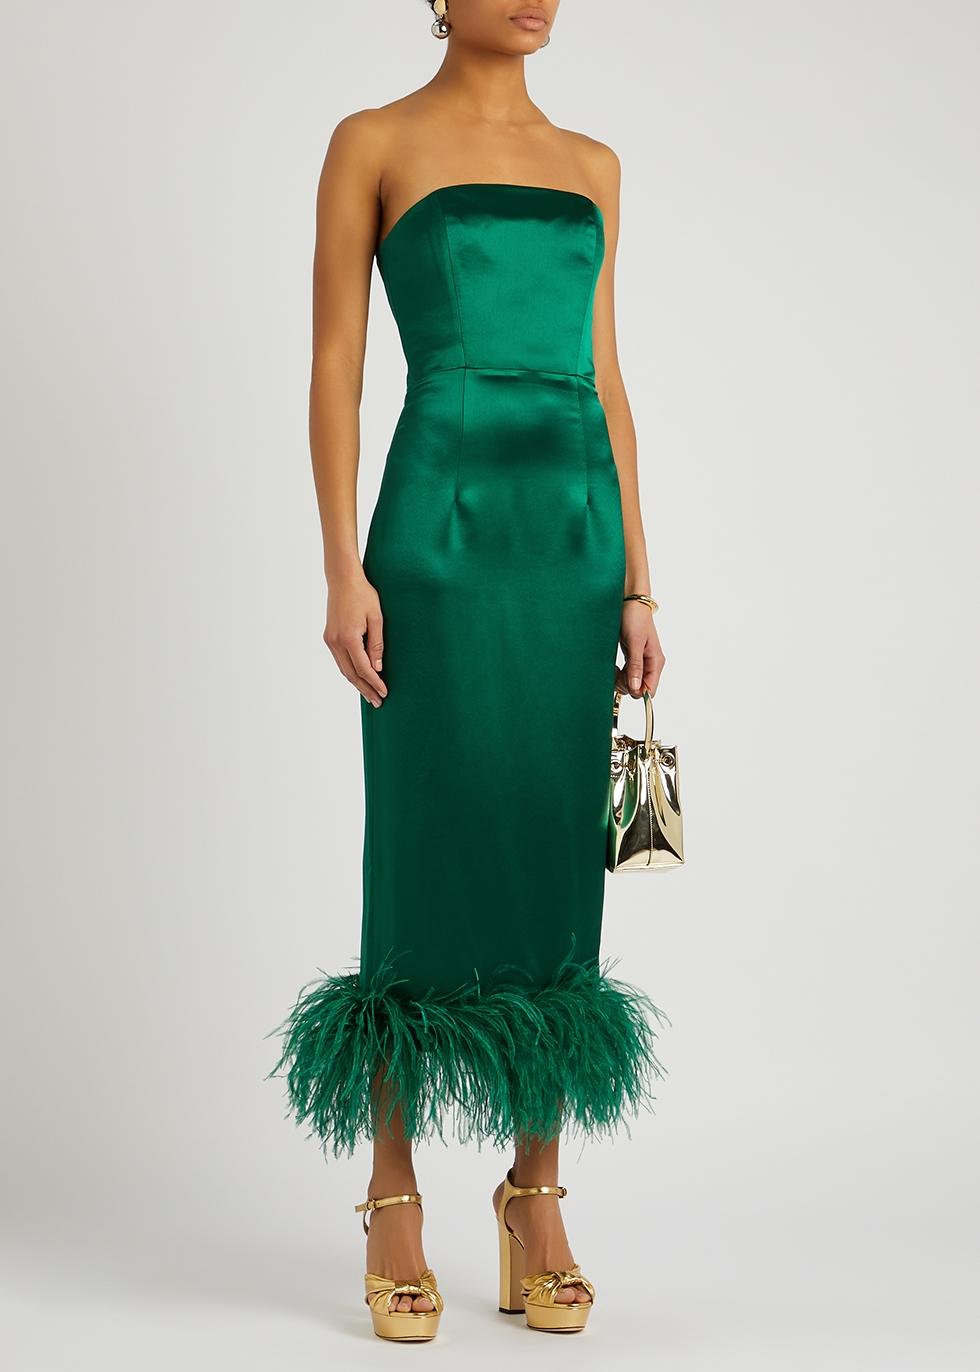 16Arlington Minelli Emerald Feather-trimmed Satin Midi Dress in Green | Lyst